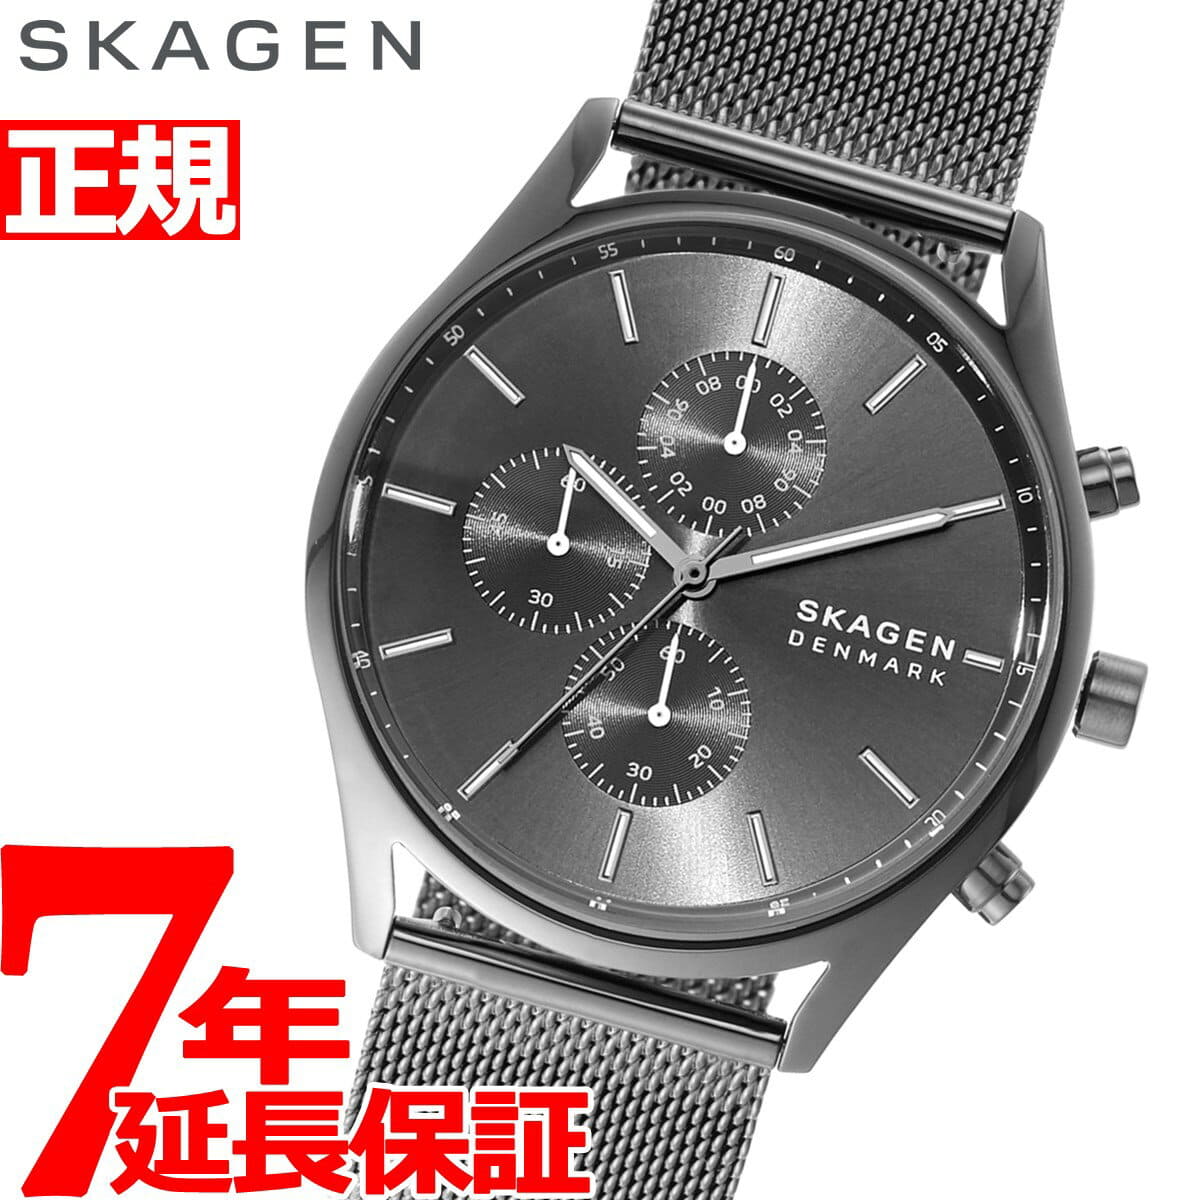 New]SKAGEN HOLST Men\'s Chronograph Watch - SKW6608 Store FORWARD BE